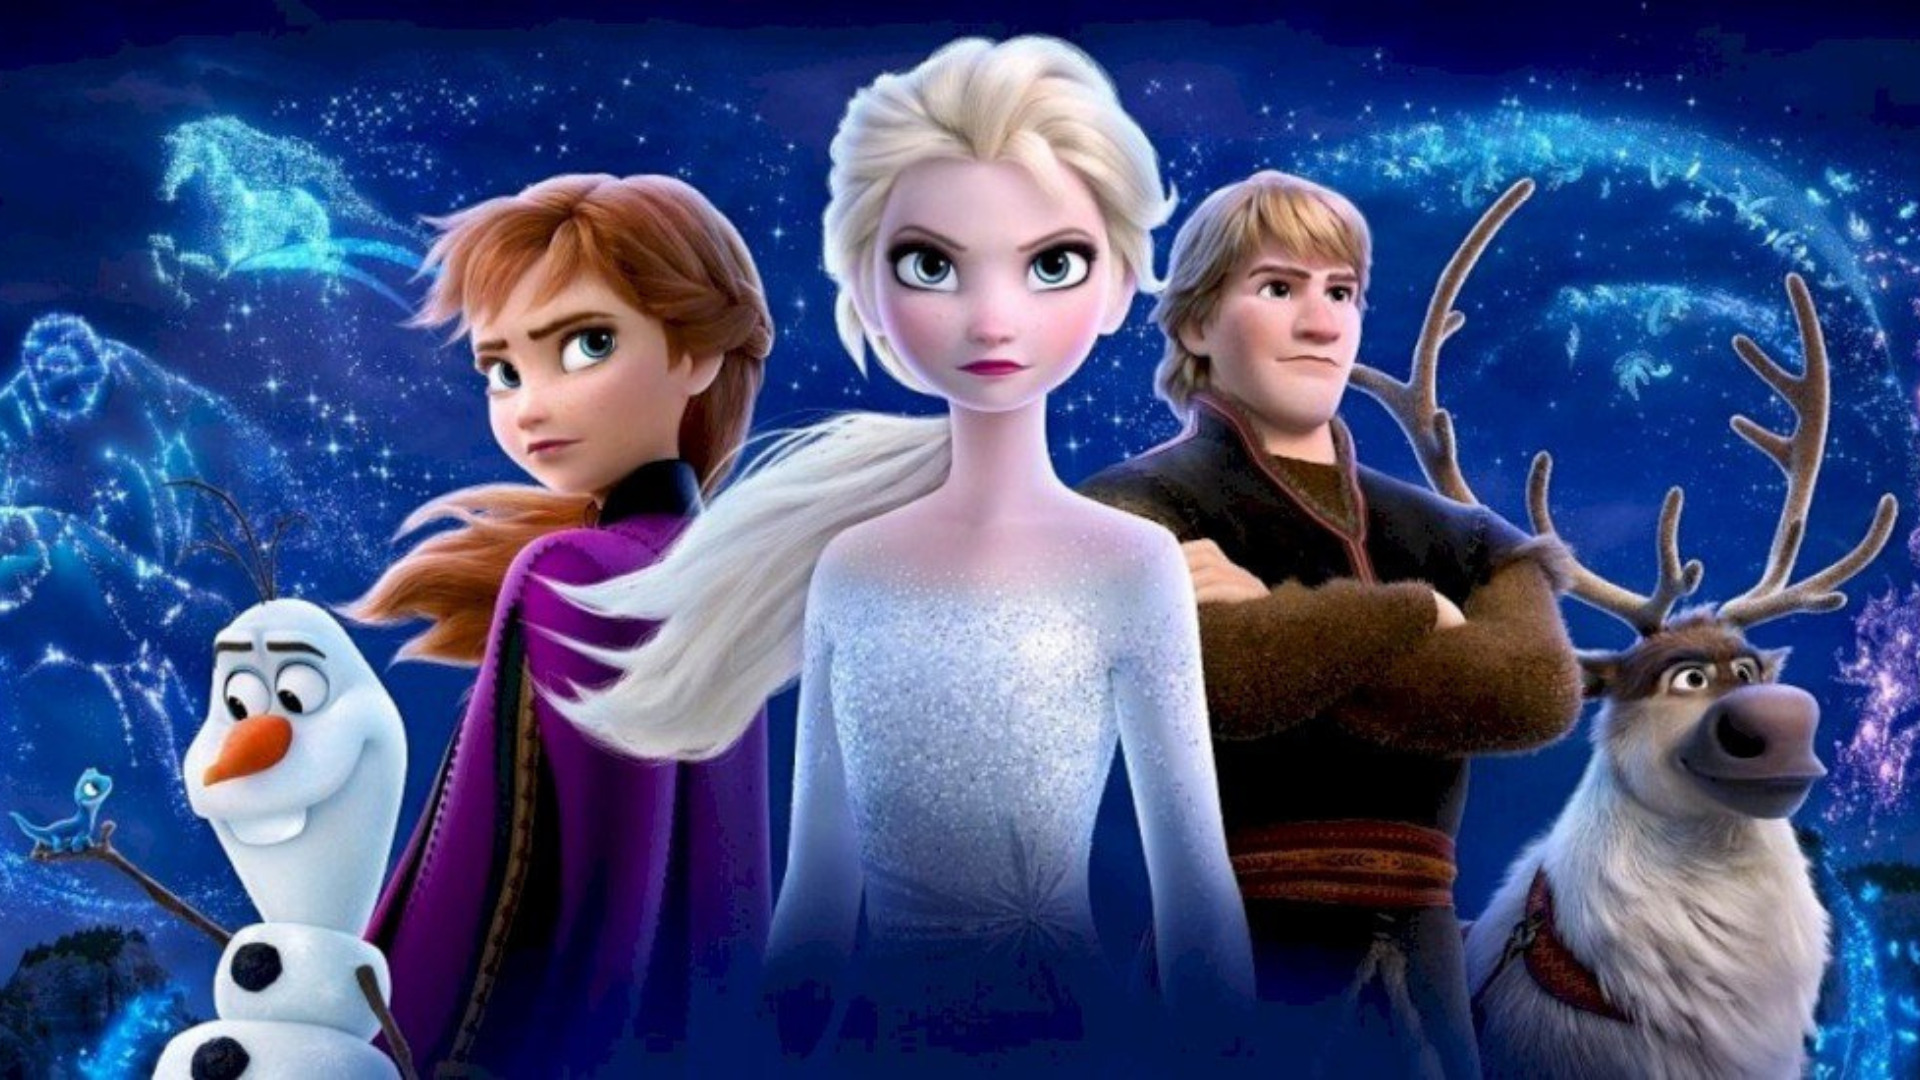 Segundo site, Frozen ganhará live-action na Disney